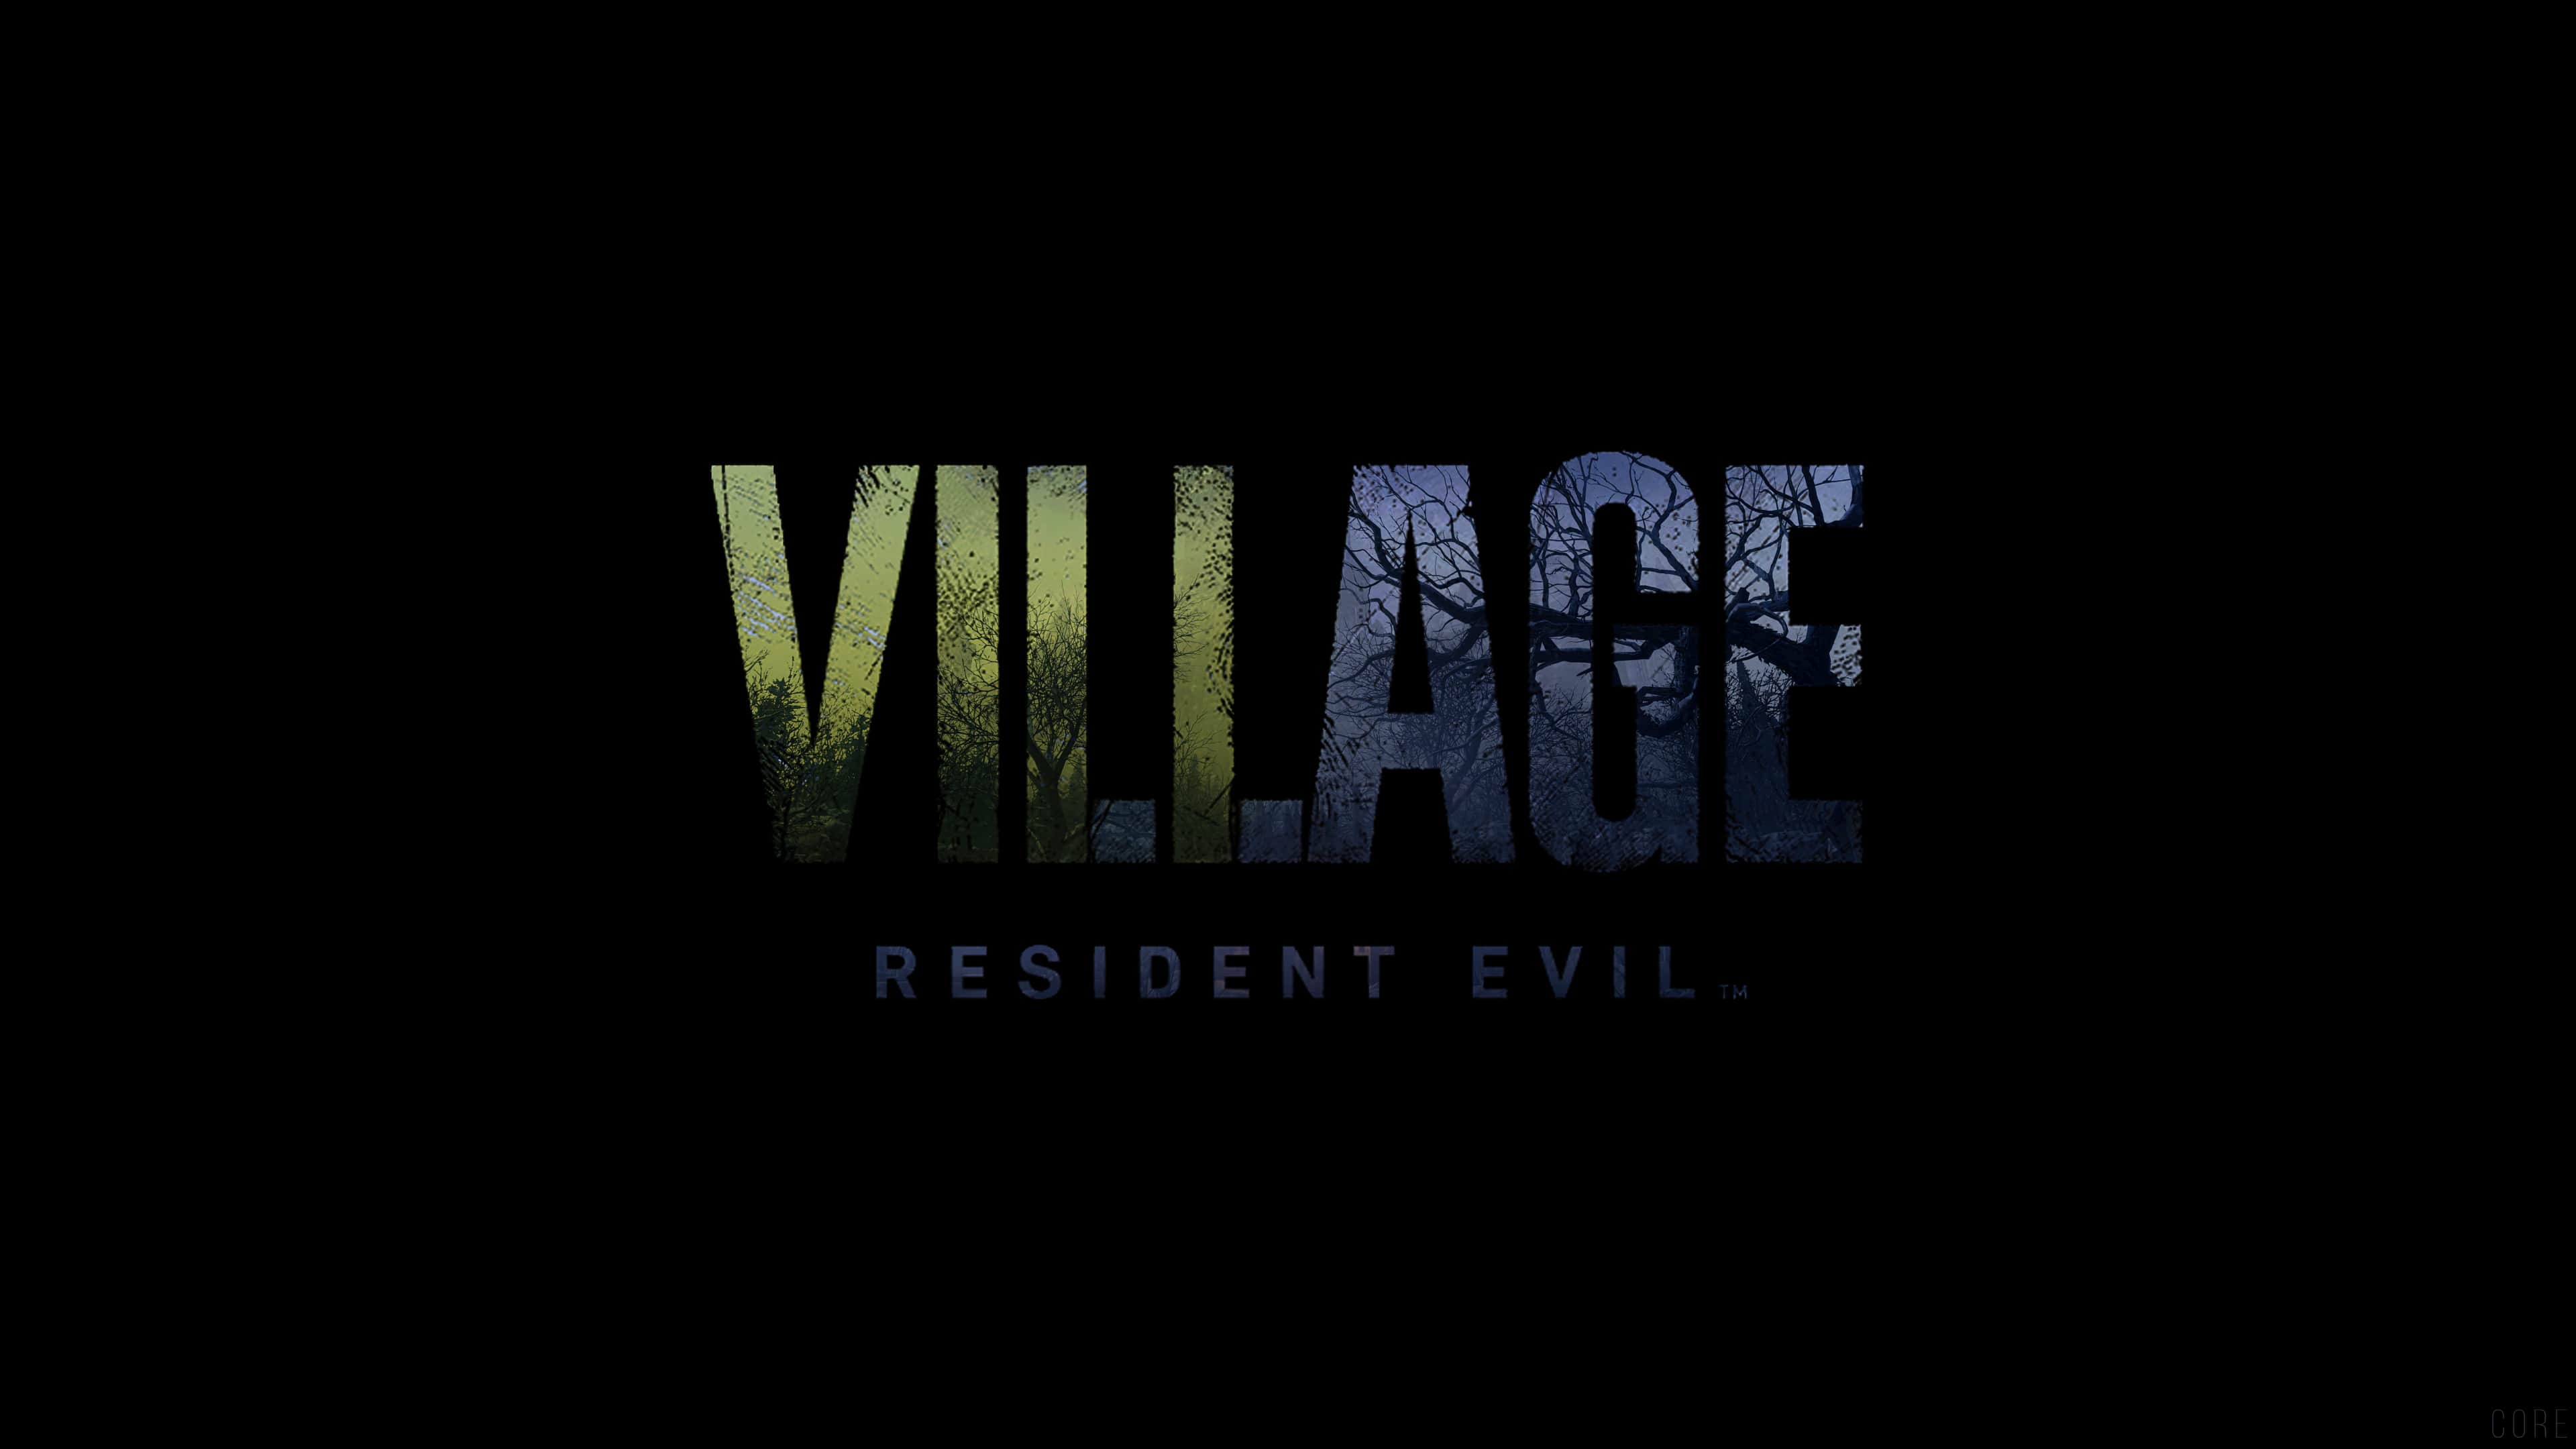 Resident evil demos. Resident Evil Village logo. Resident Evil 8 Village logo. Resident Evil Village обложка. Резидент ивел 8 стрим.